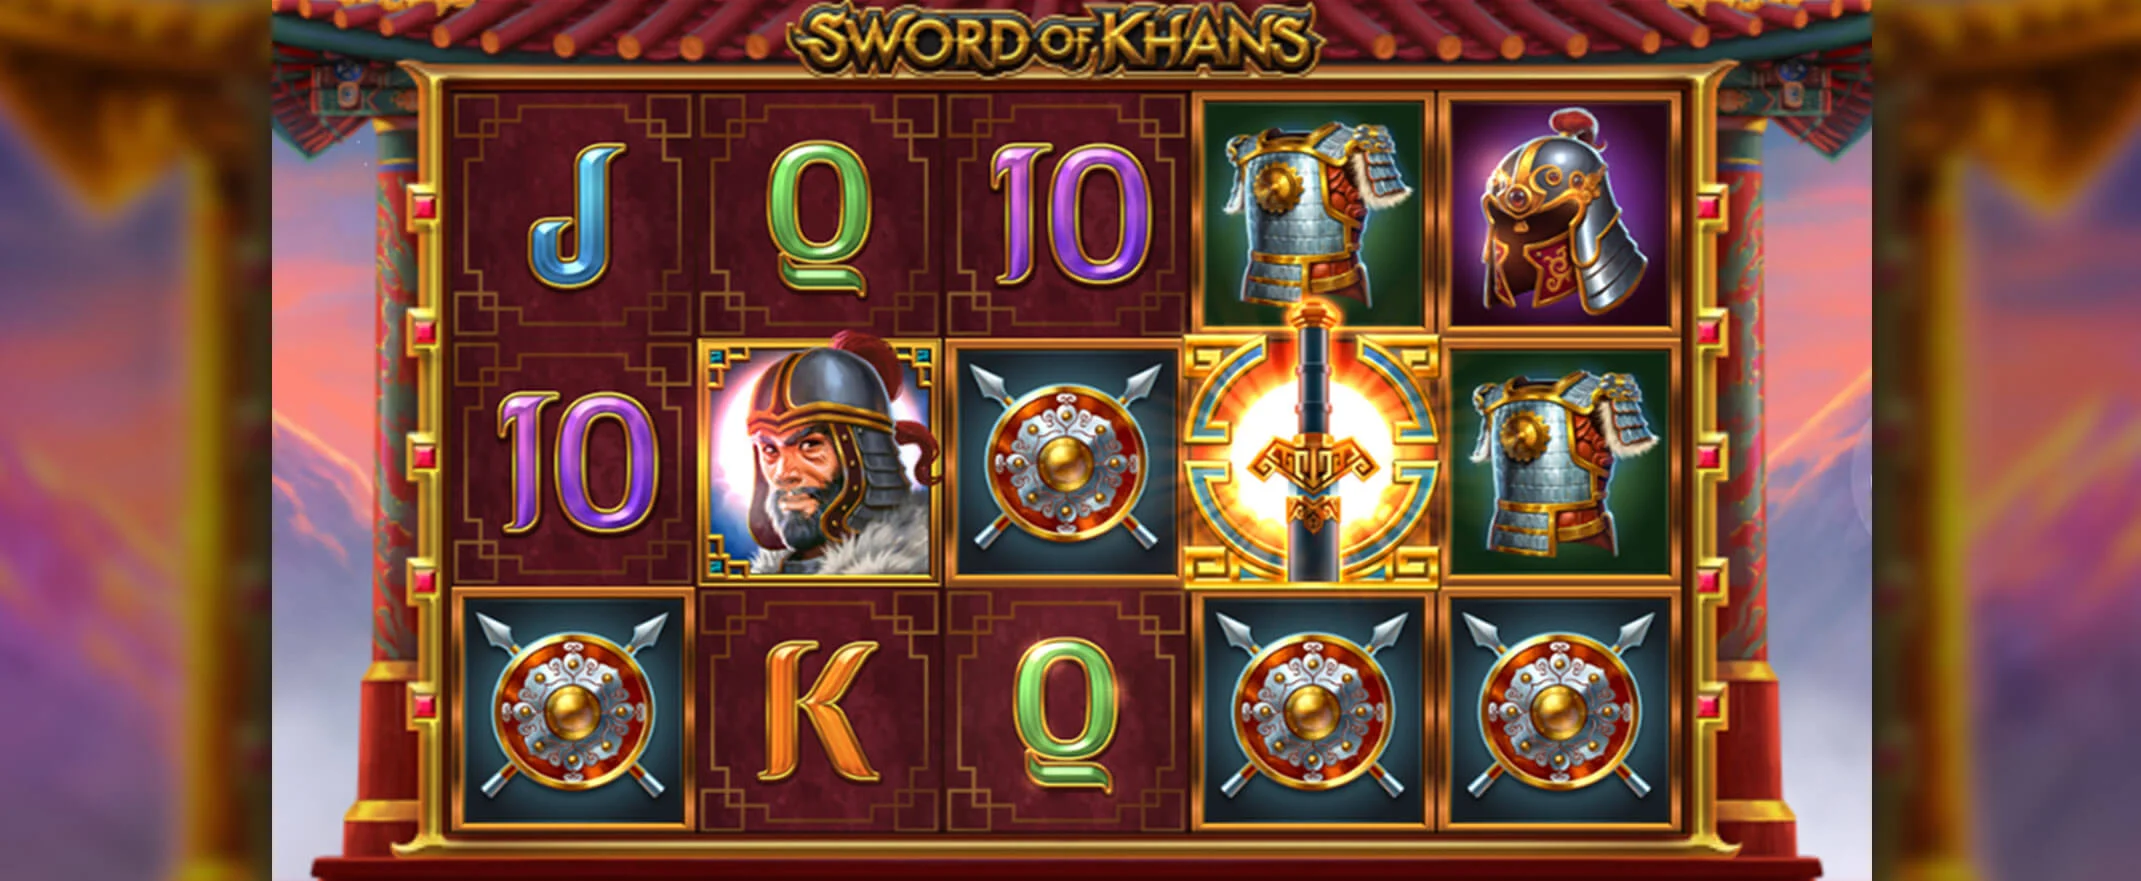 Sword of Khans 2